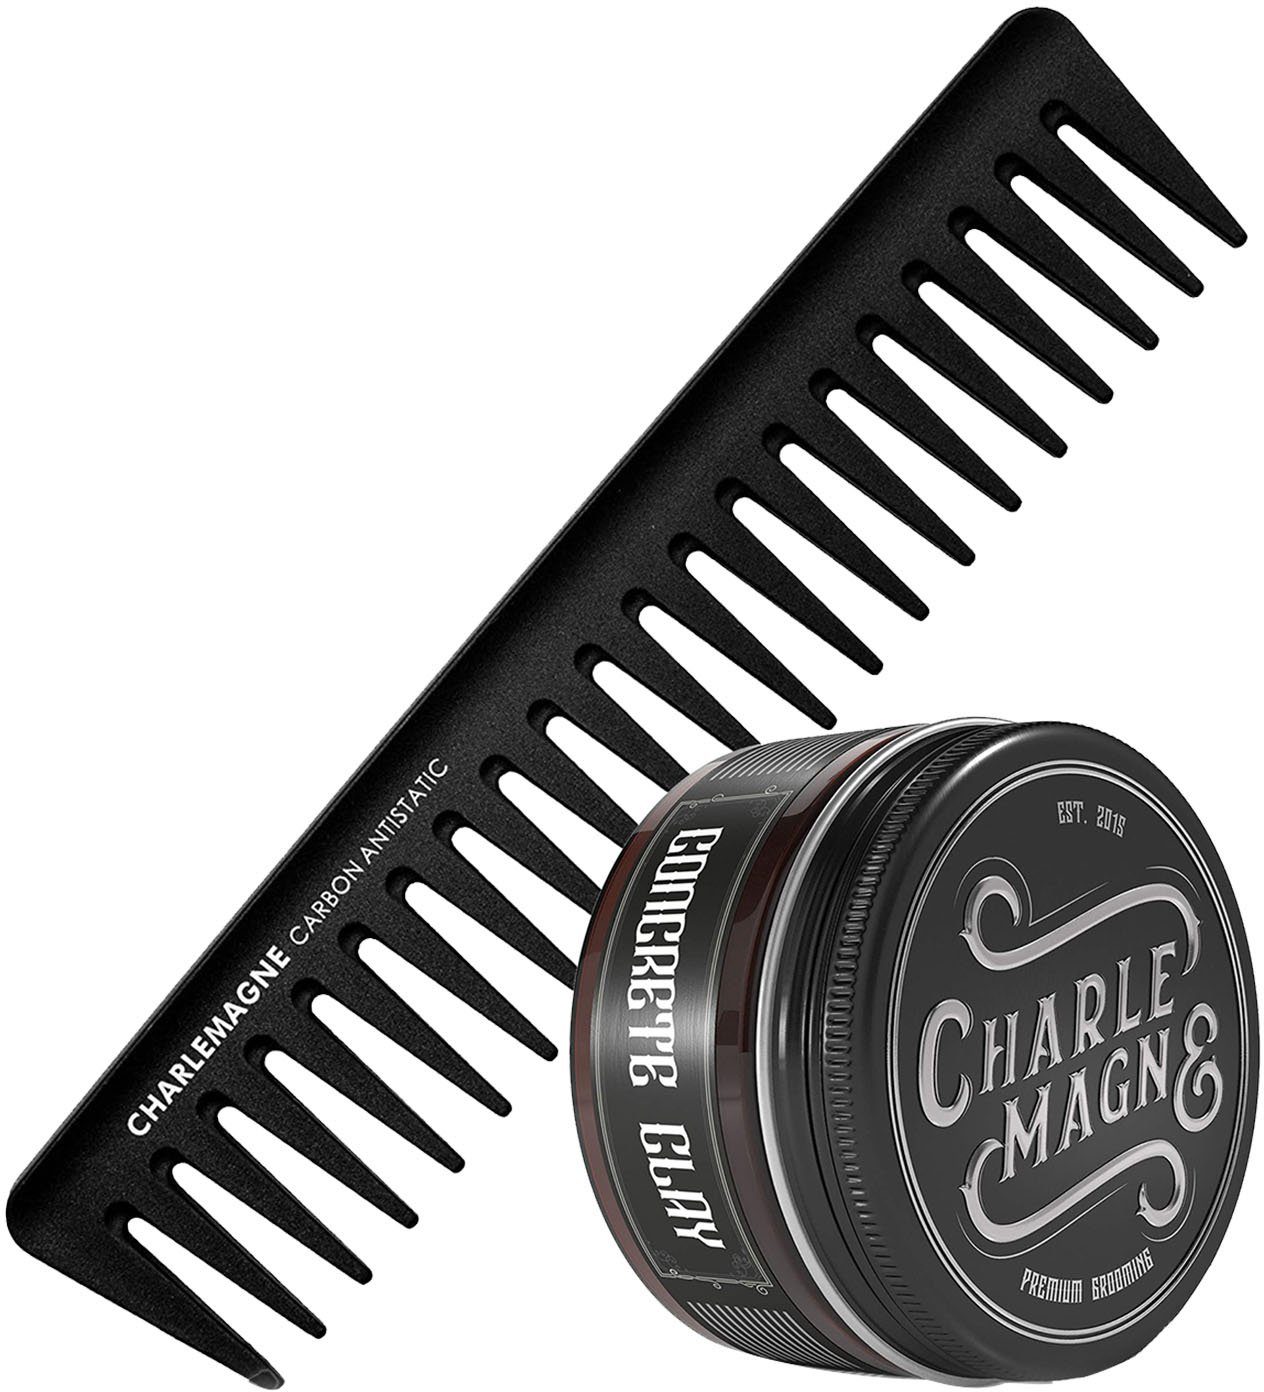 CHARLEMAGNE Haarpflege-Set Power Must Haves, 2-tlg. | Haarpflege-Sets